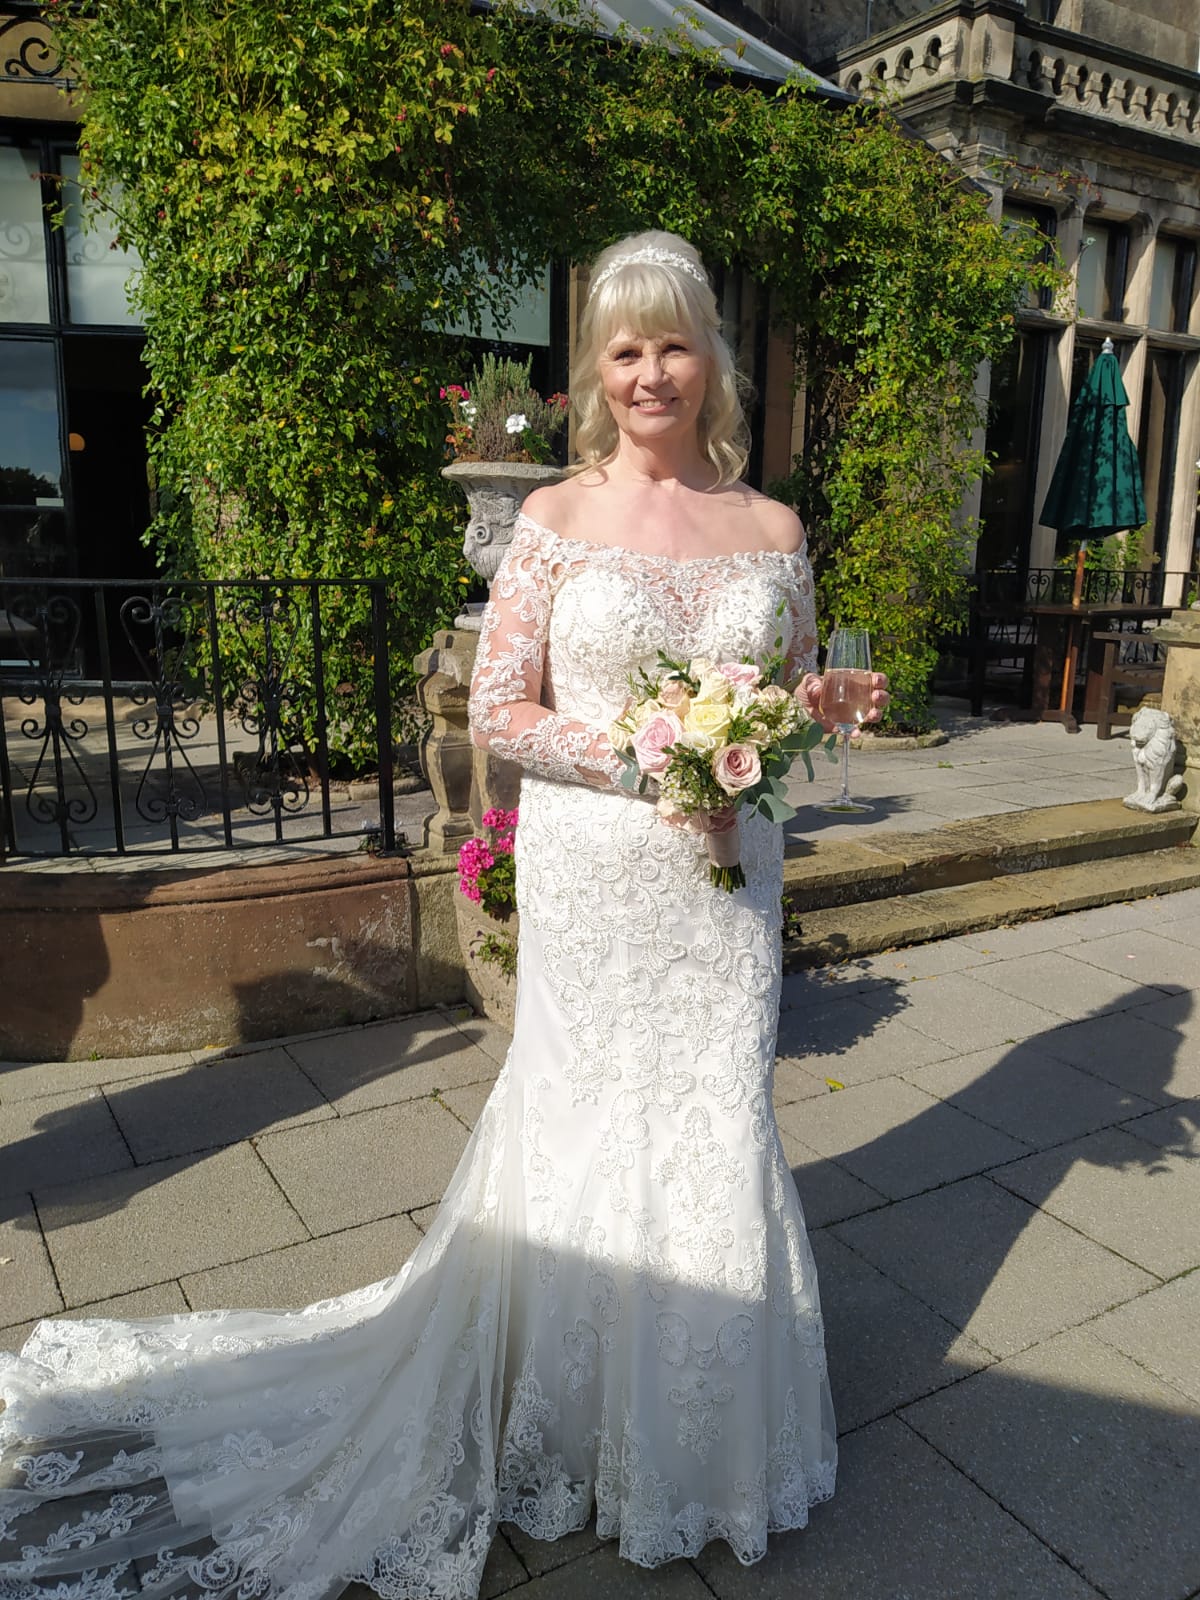 Christine in her Morilee wedding dress